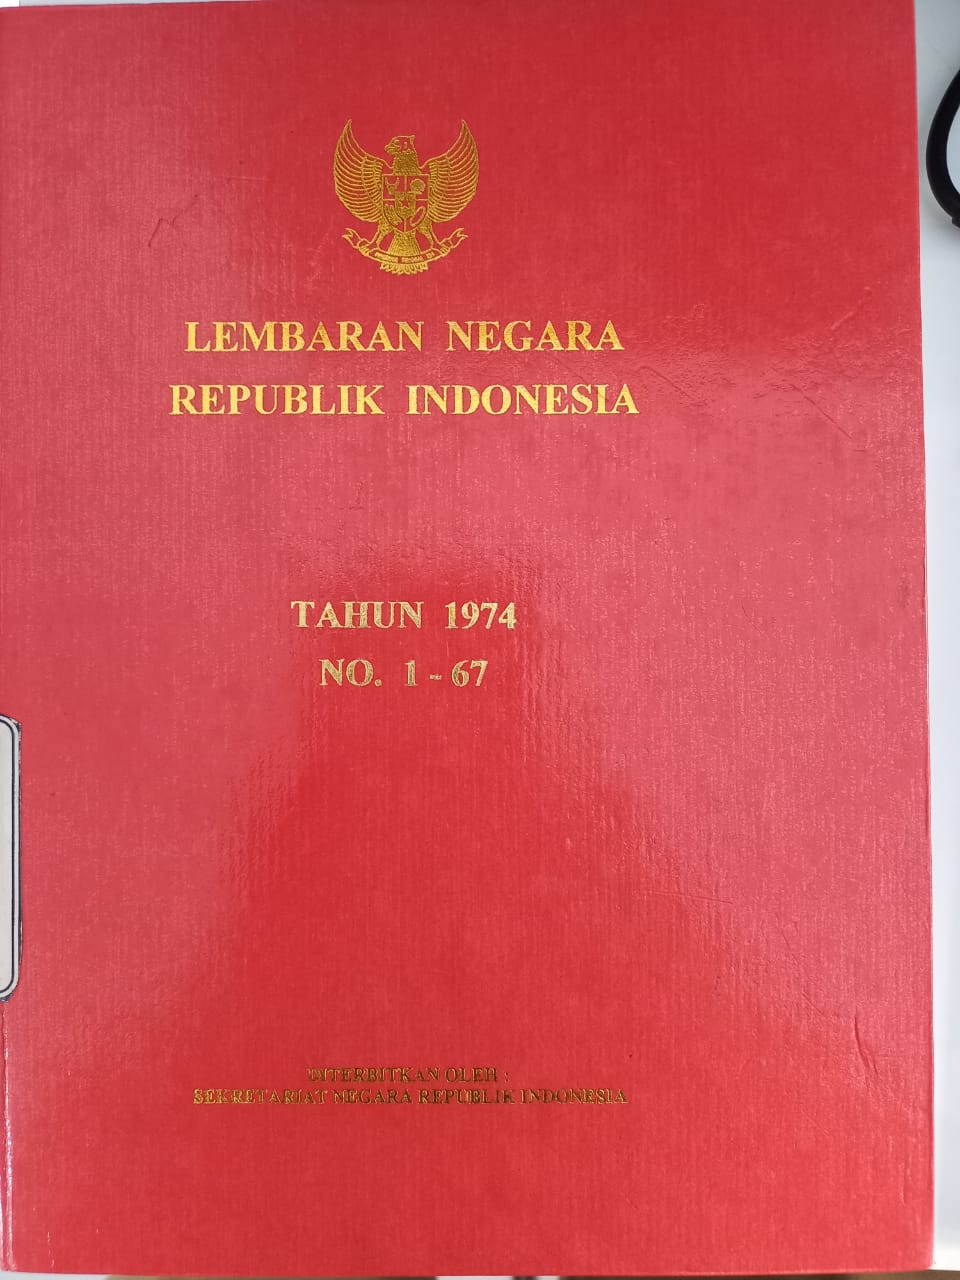 LEMBARAN NEGARA REPUBLIK INDONESIA TAHUN 1974 NO. 1-67